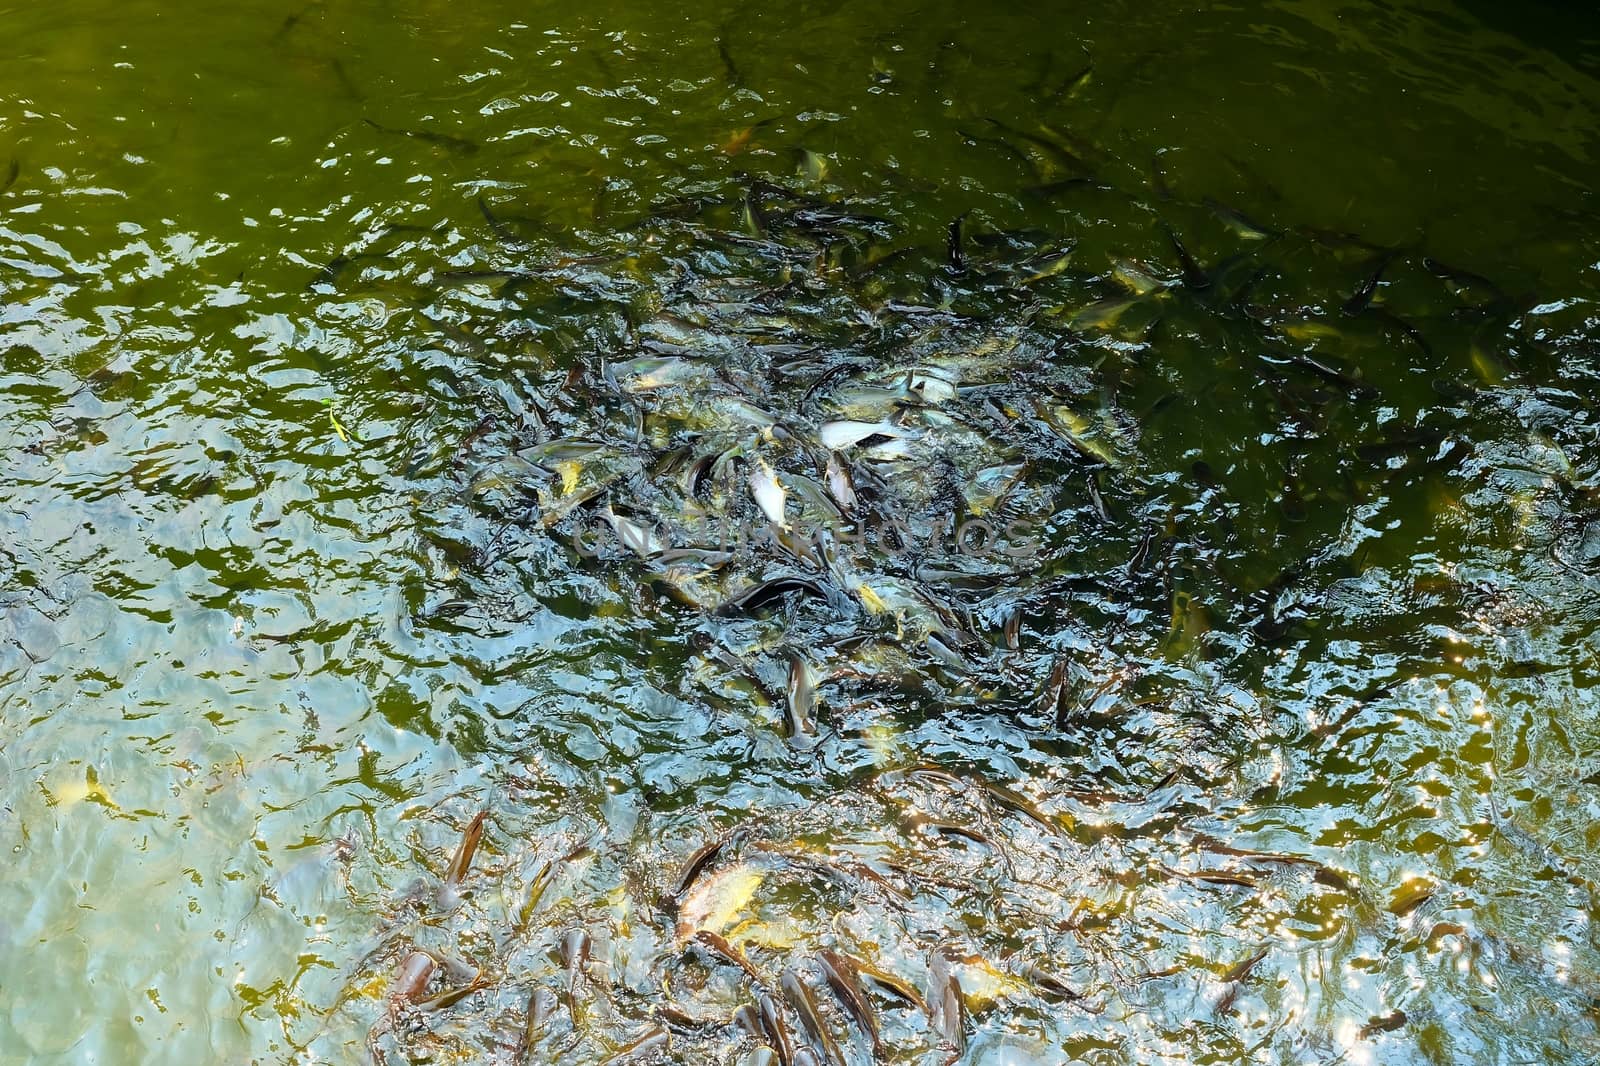 Feeding Fish in Pool. by mesamong